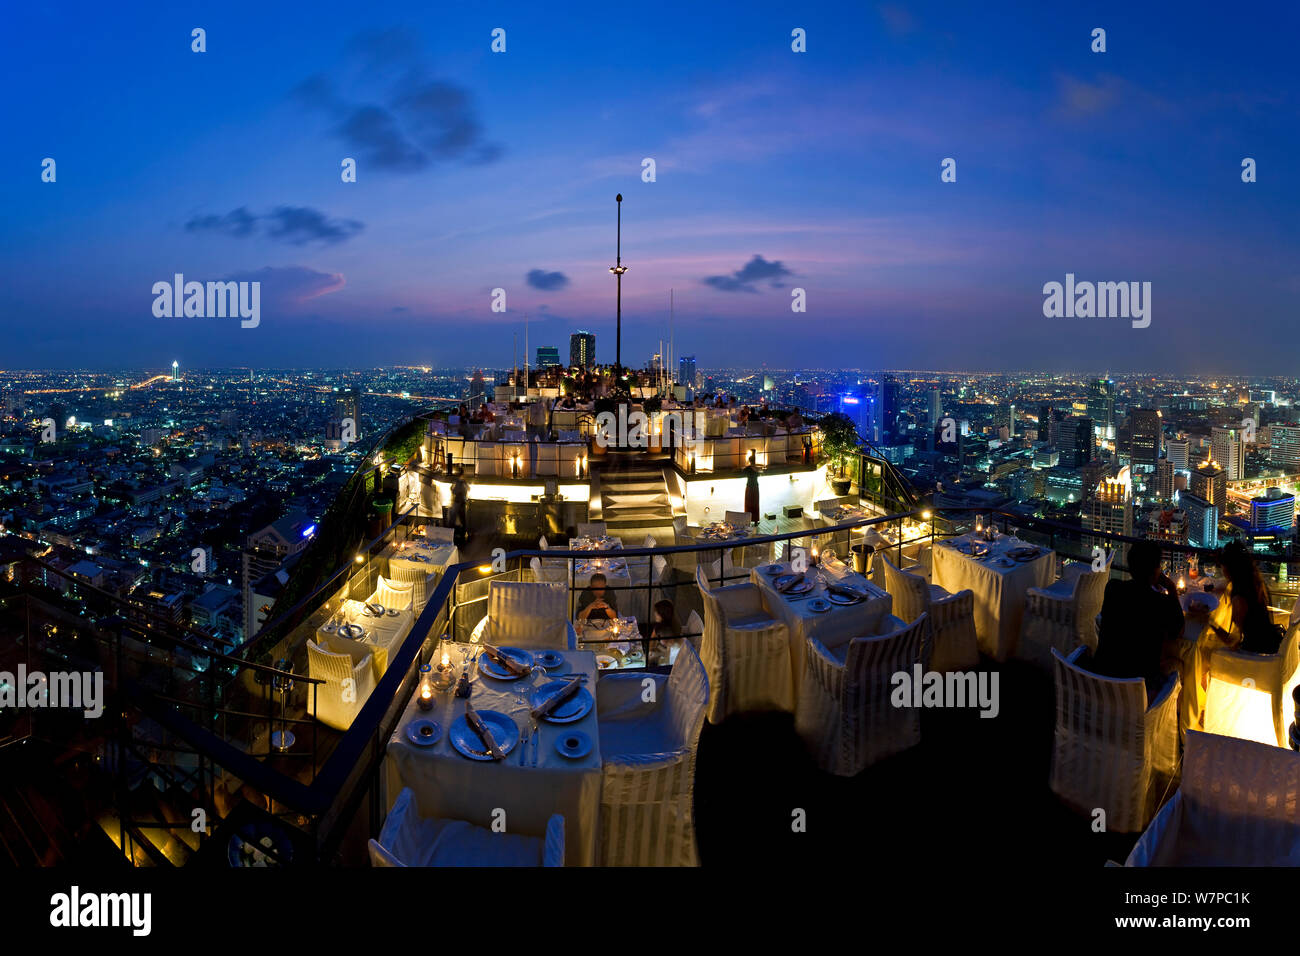 The view over the Bangkok City skyline from Vertigo, a bar and restaurant on top of the Banyan Tree Hotel, Bangkok, Thailand, 2010 Stock Photo